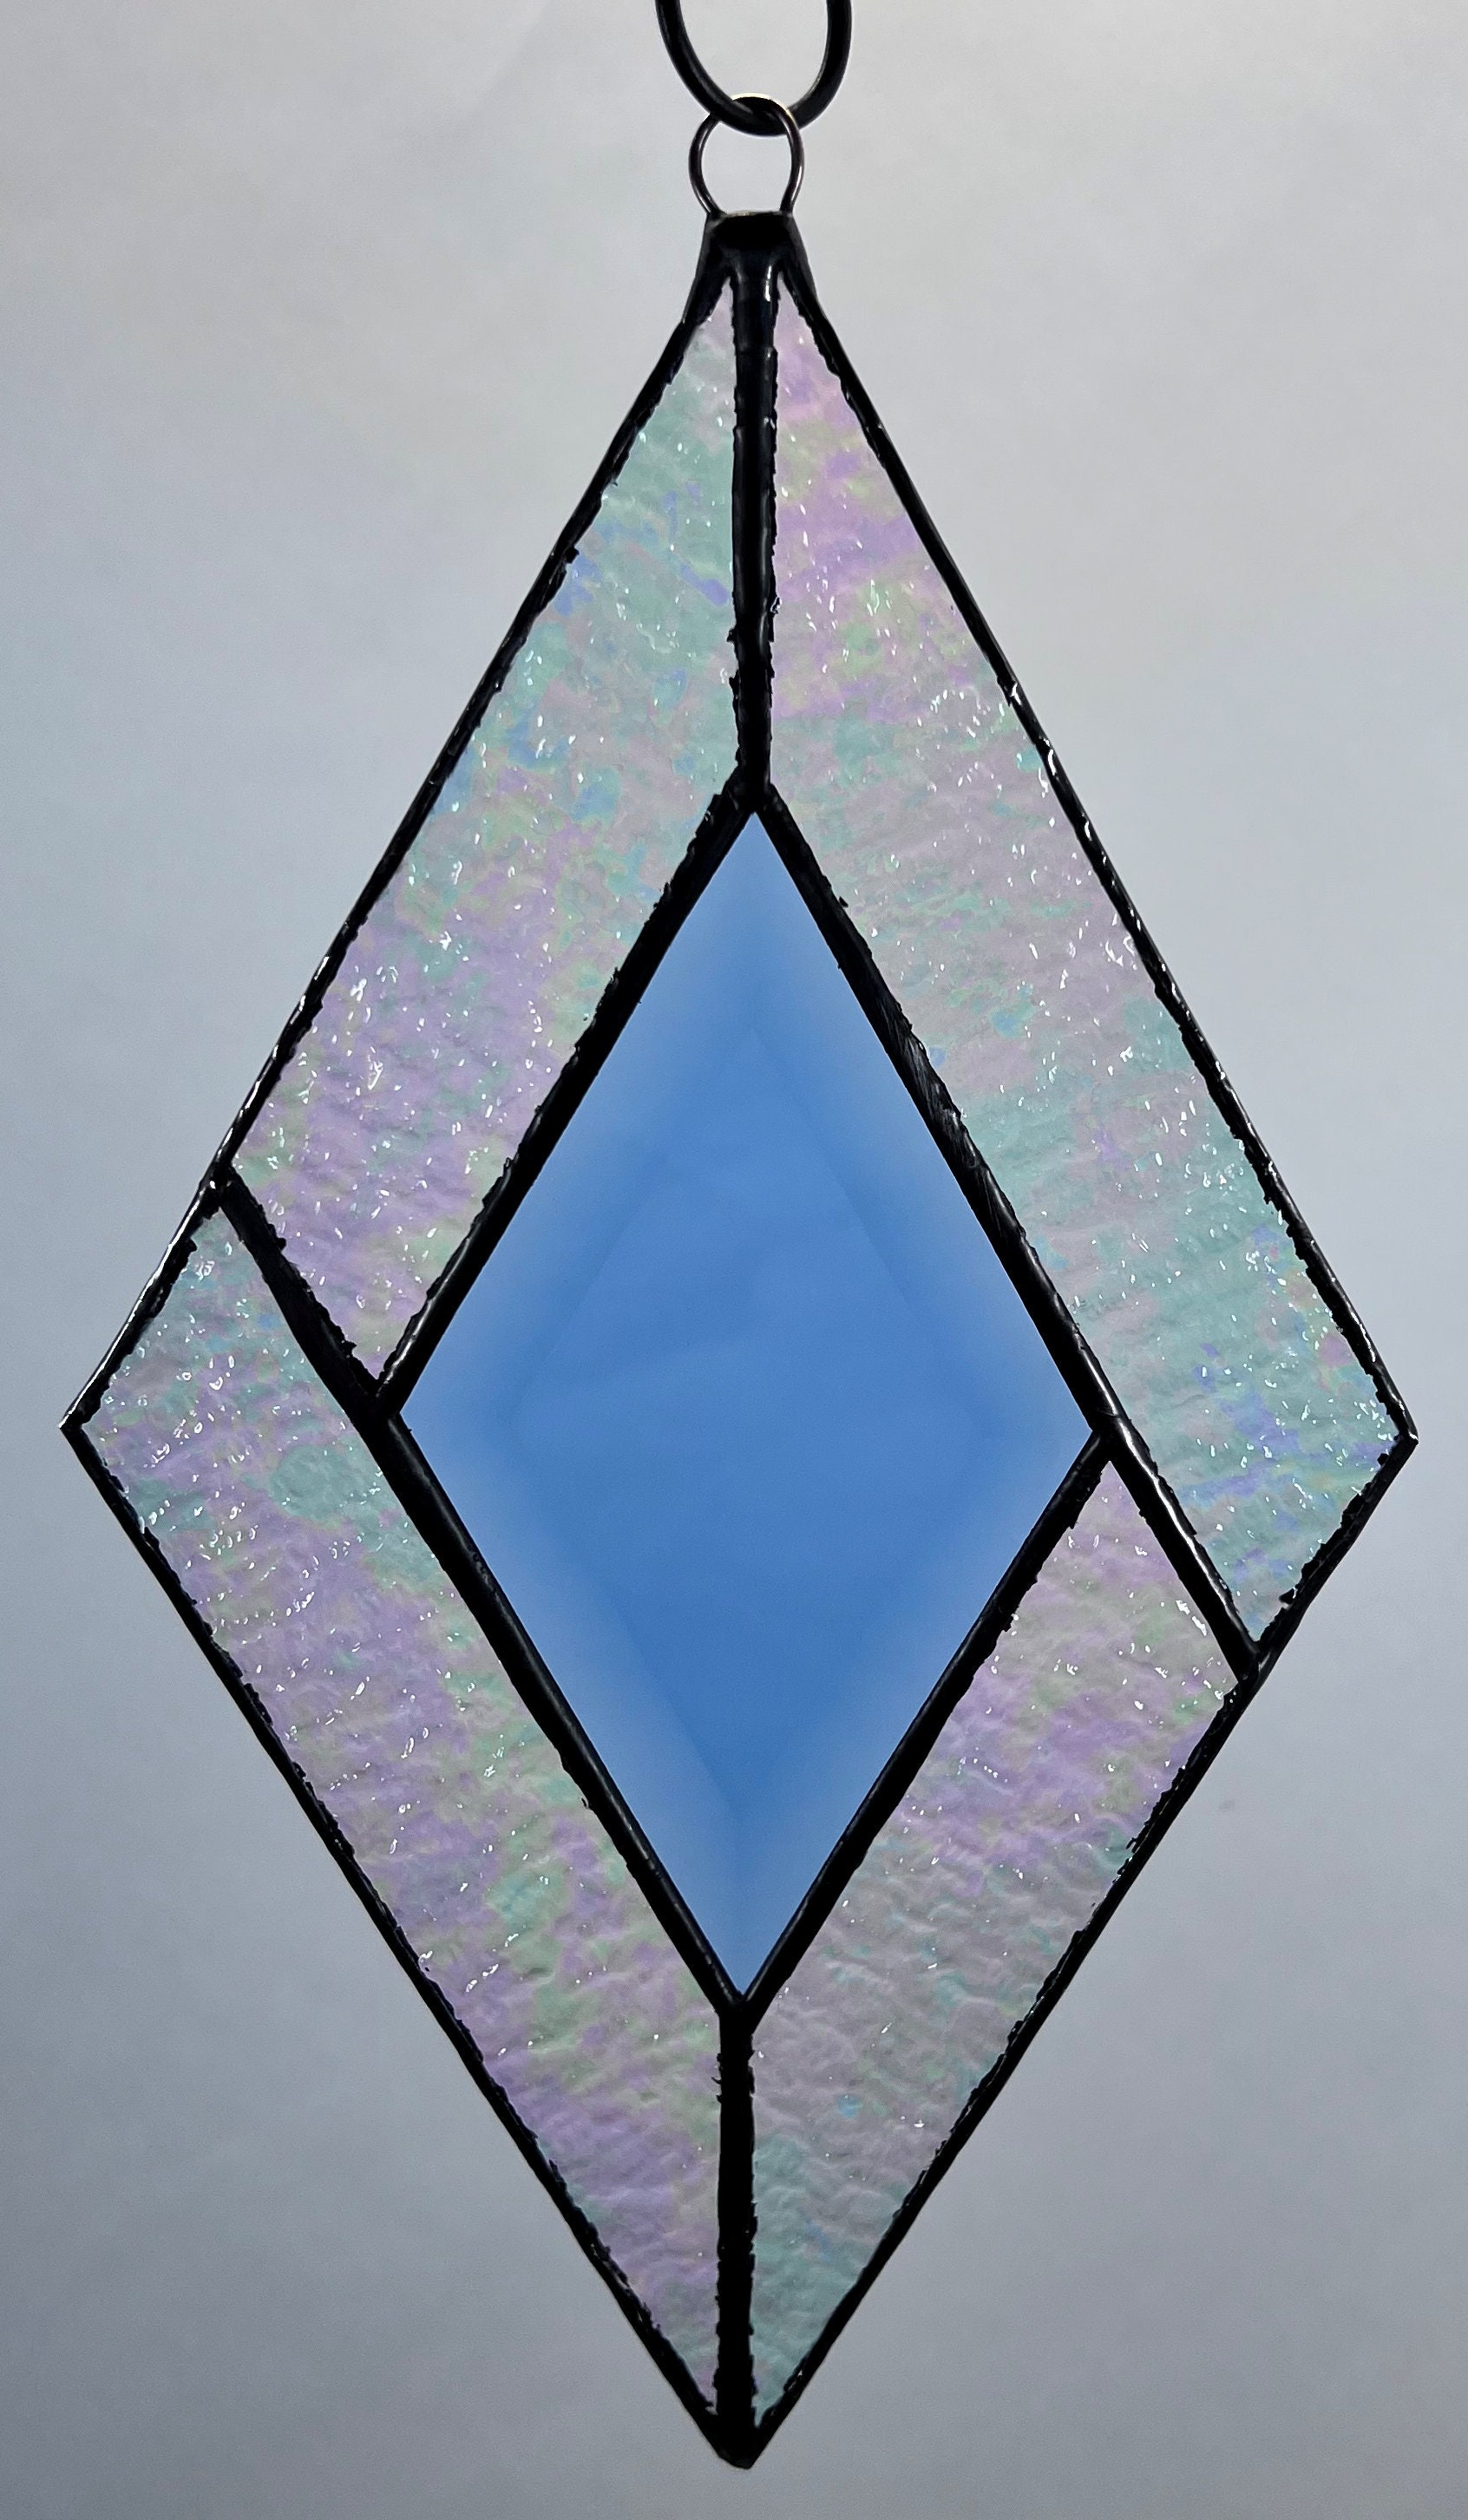 Triangle Diamond with Half inch bevel